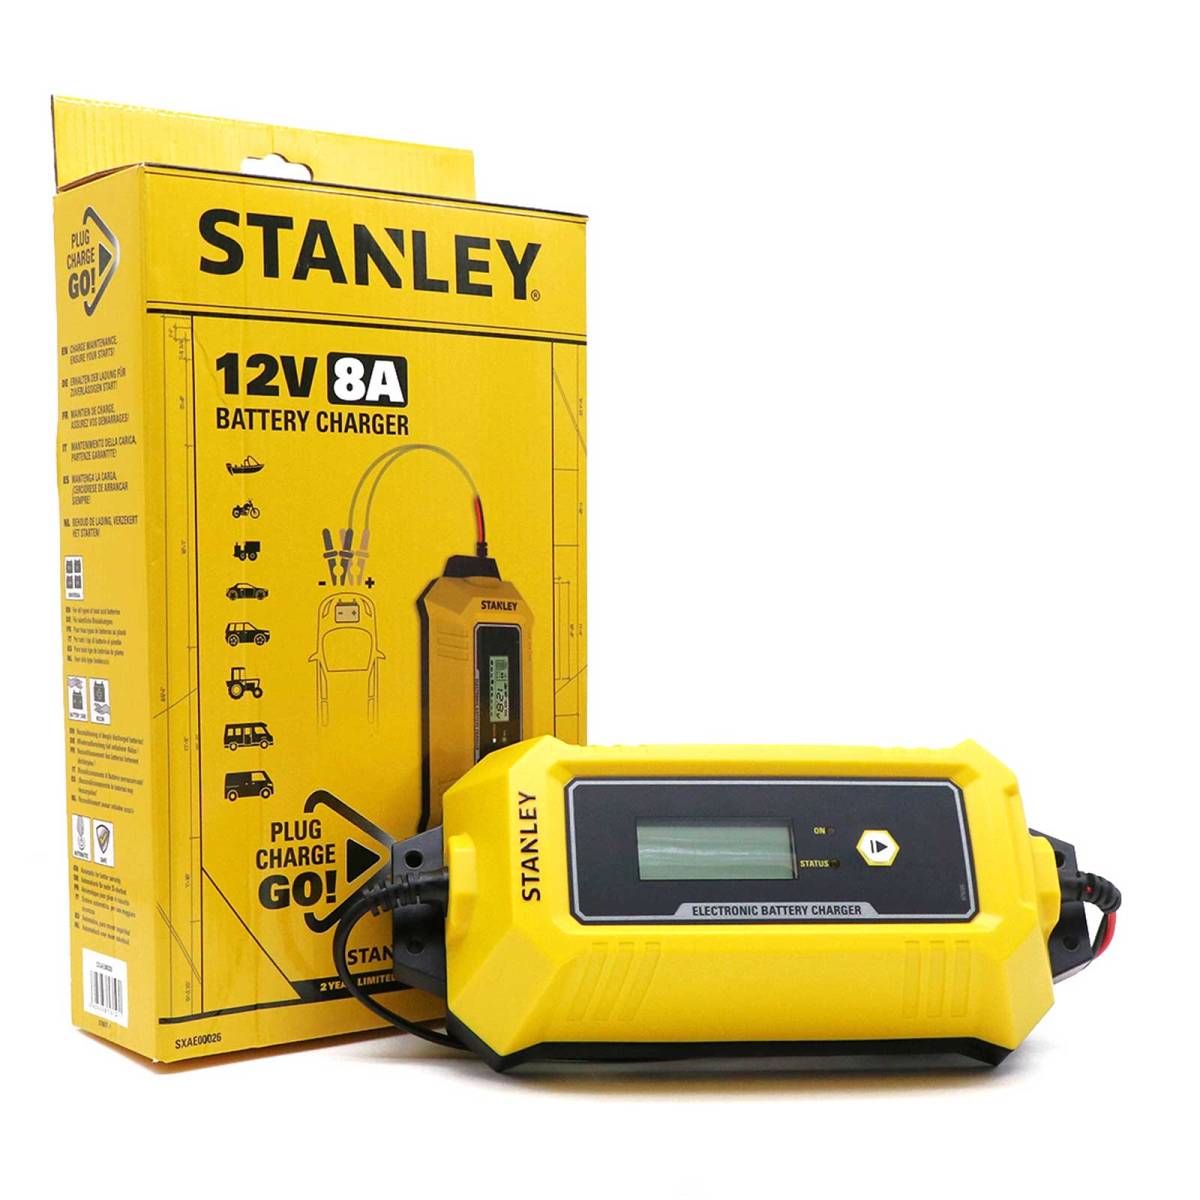 Stanley Autobatterie-Ladegerät 12V 8A IP65